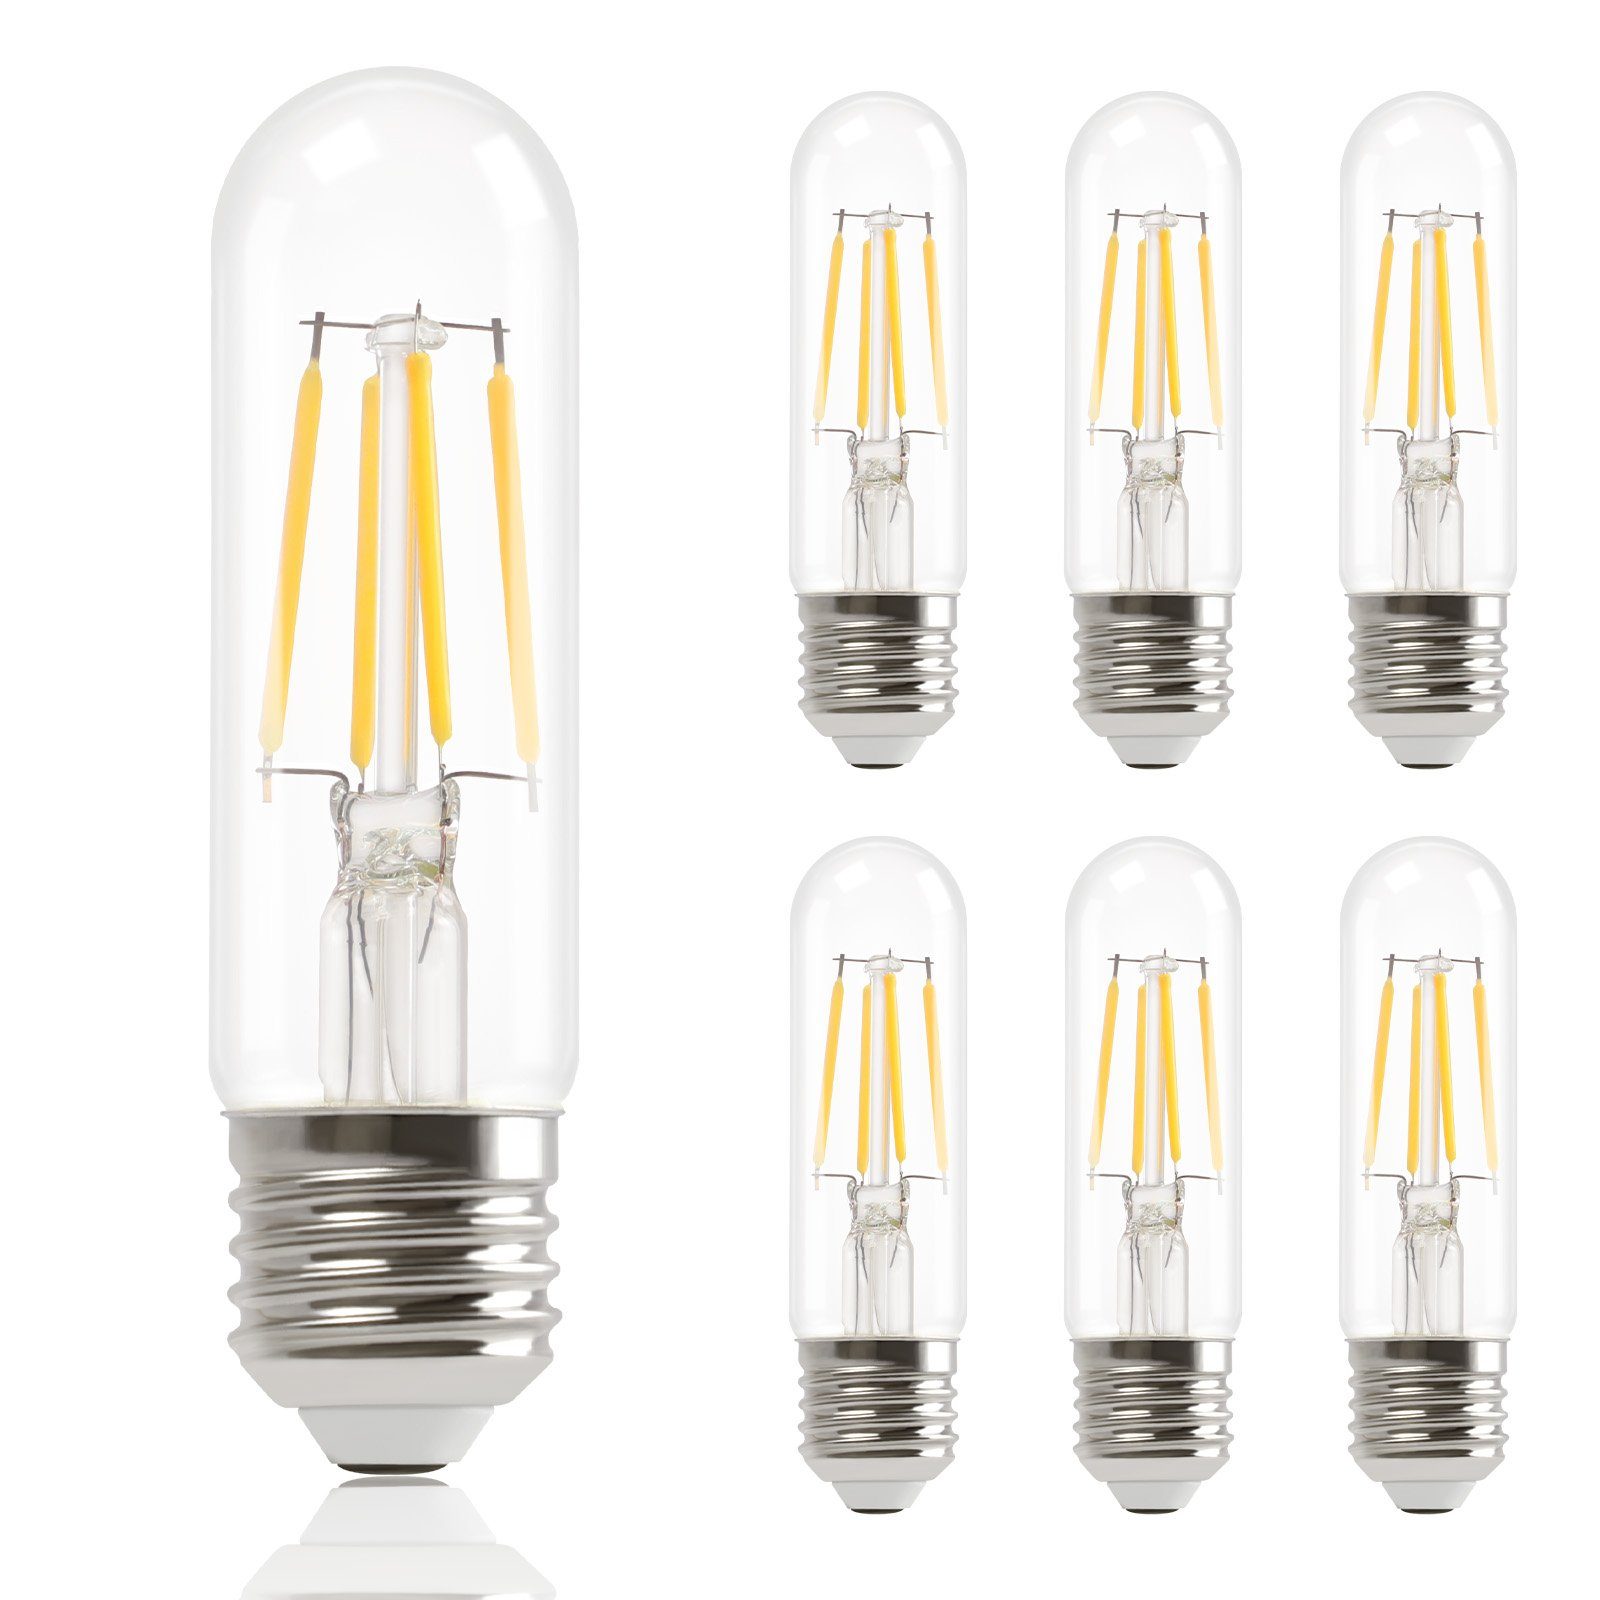 ZMH LED-Leuchtmittel Warmweiß 4W lampe Glühbirnen Vintage Lampe Birnen Schlafzimmer, E27, 6 St., 2700k, T30 LED Lampe Retro Filament Energiesparlampe Nicht Dimmbar